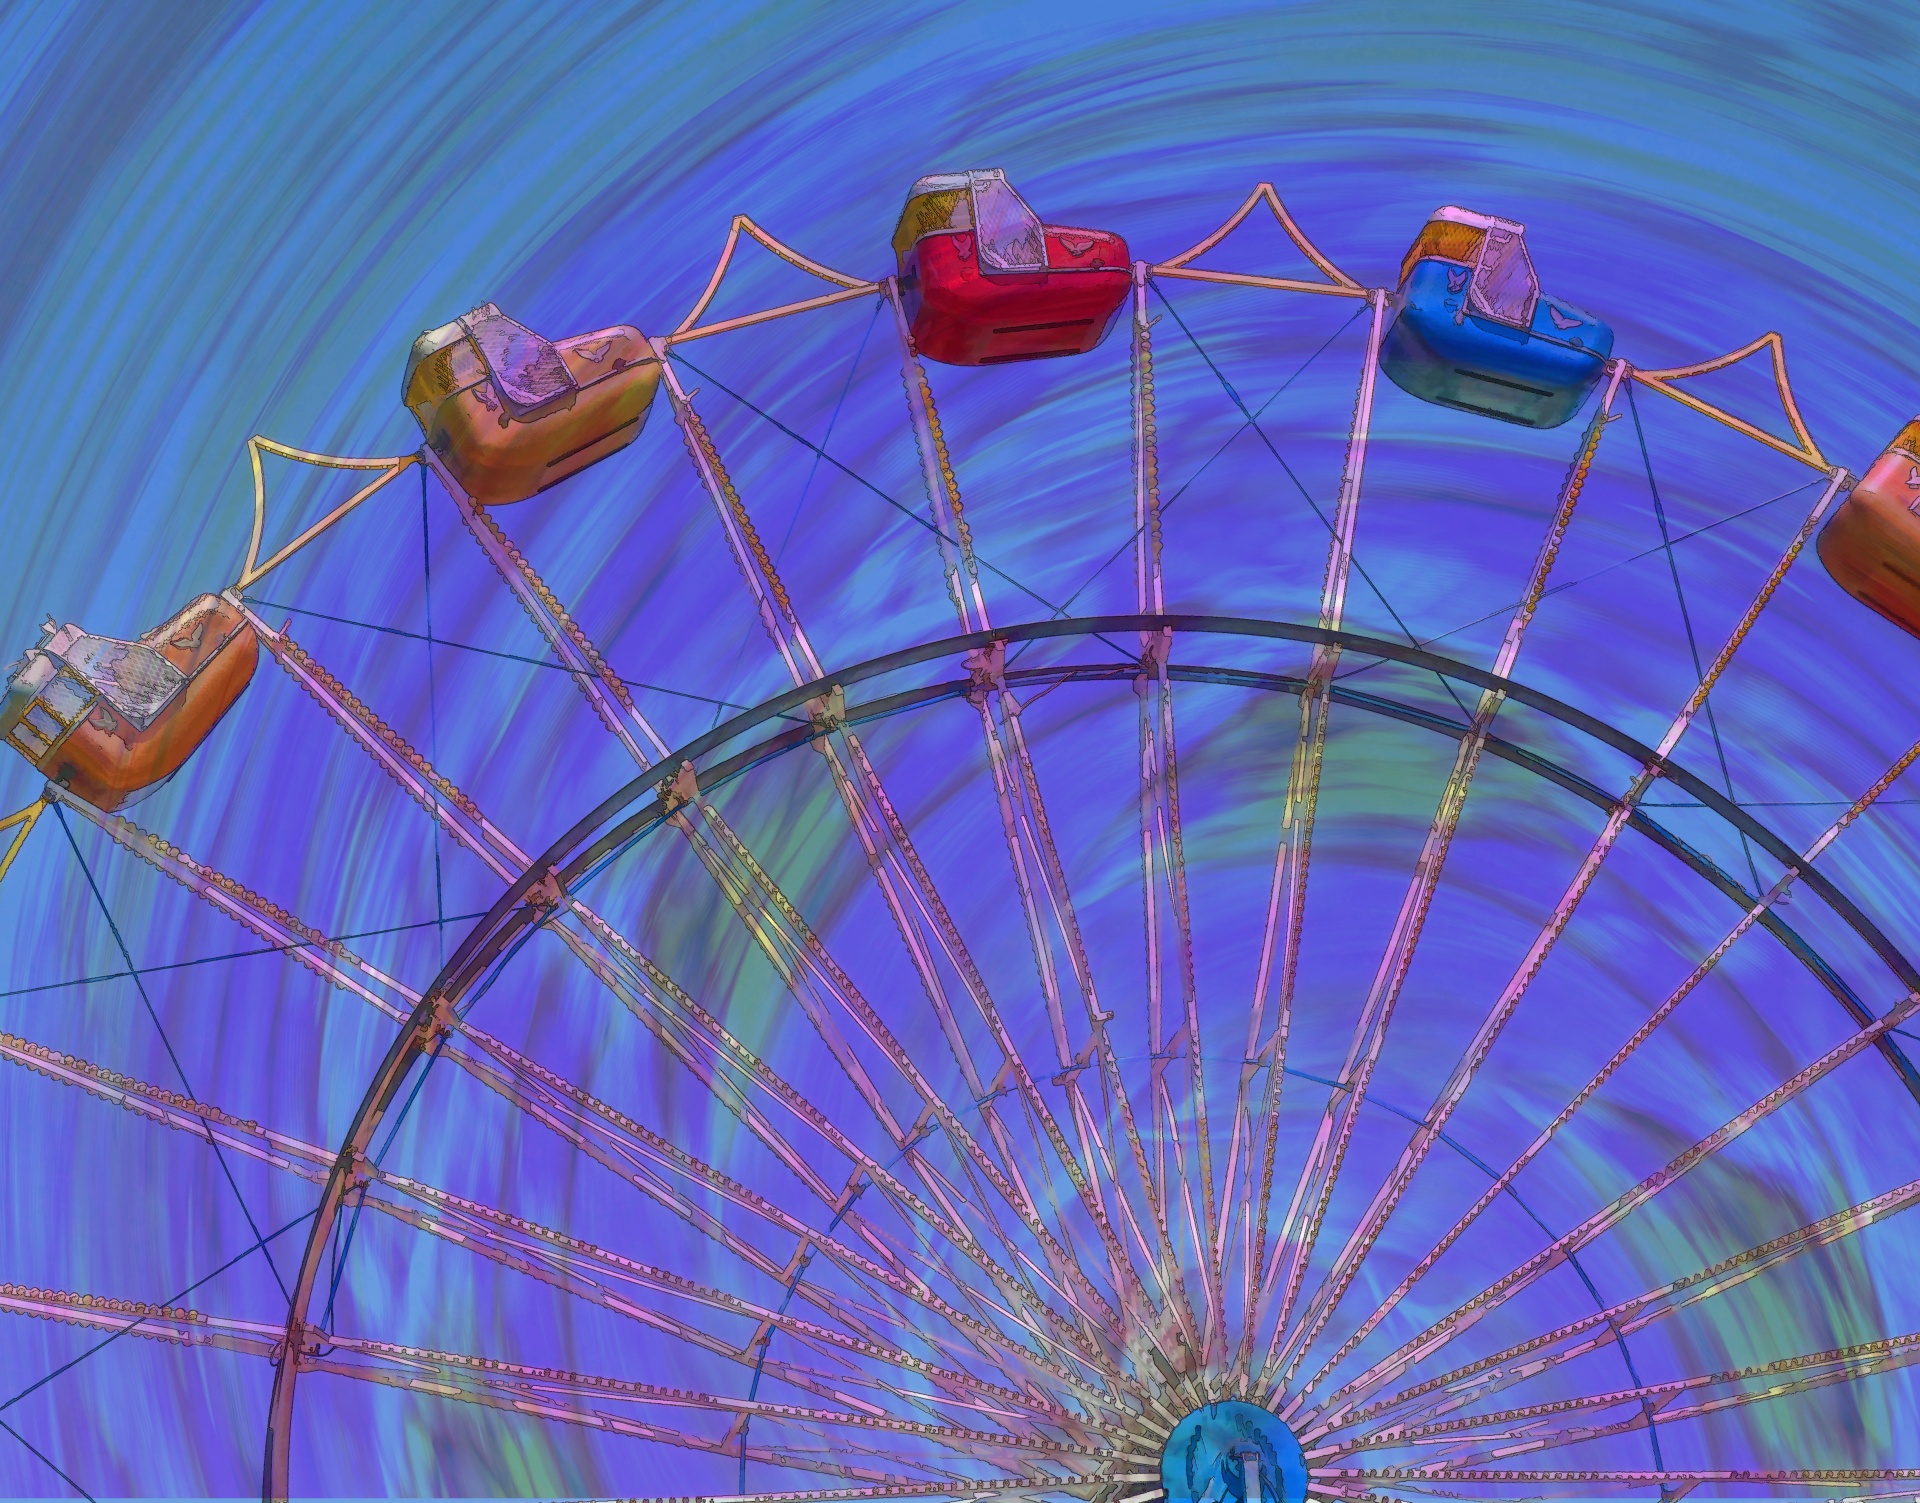 colorful artistic rendering of a Ferriswheel in purple hues